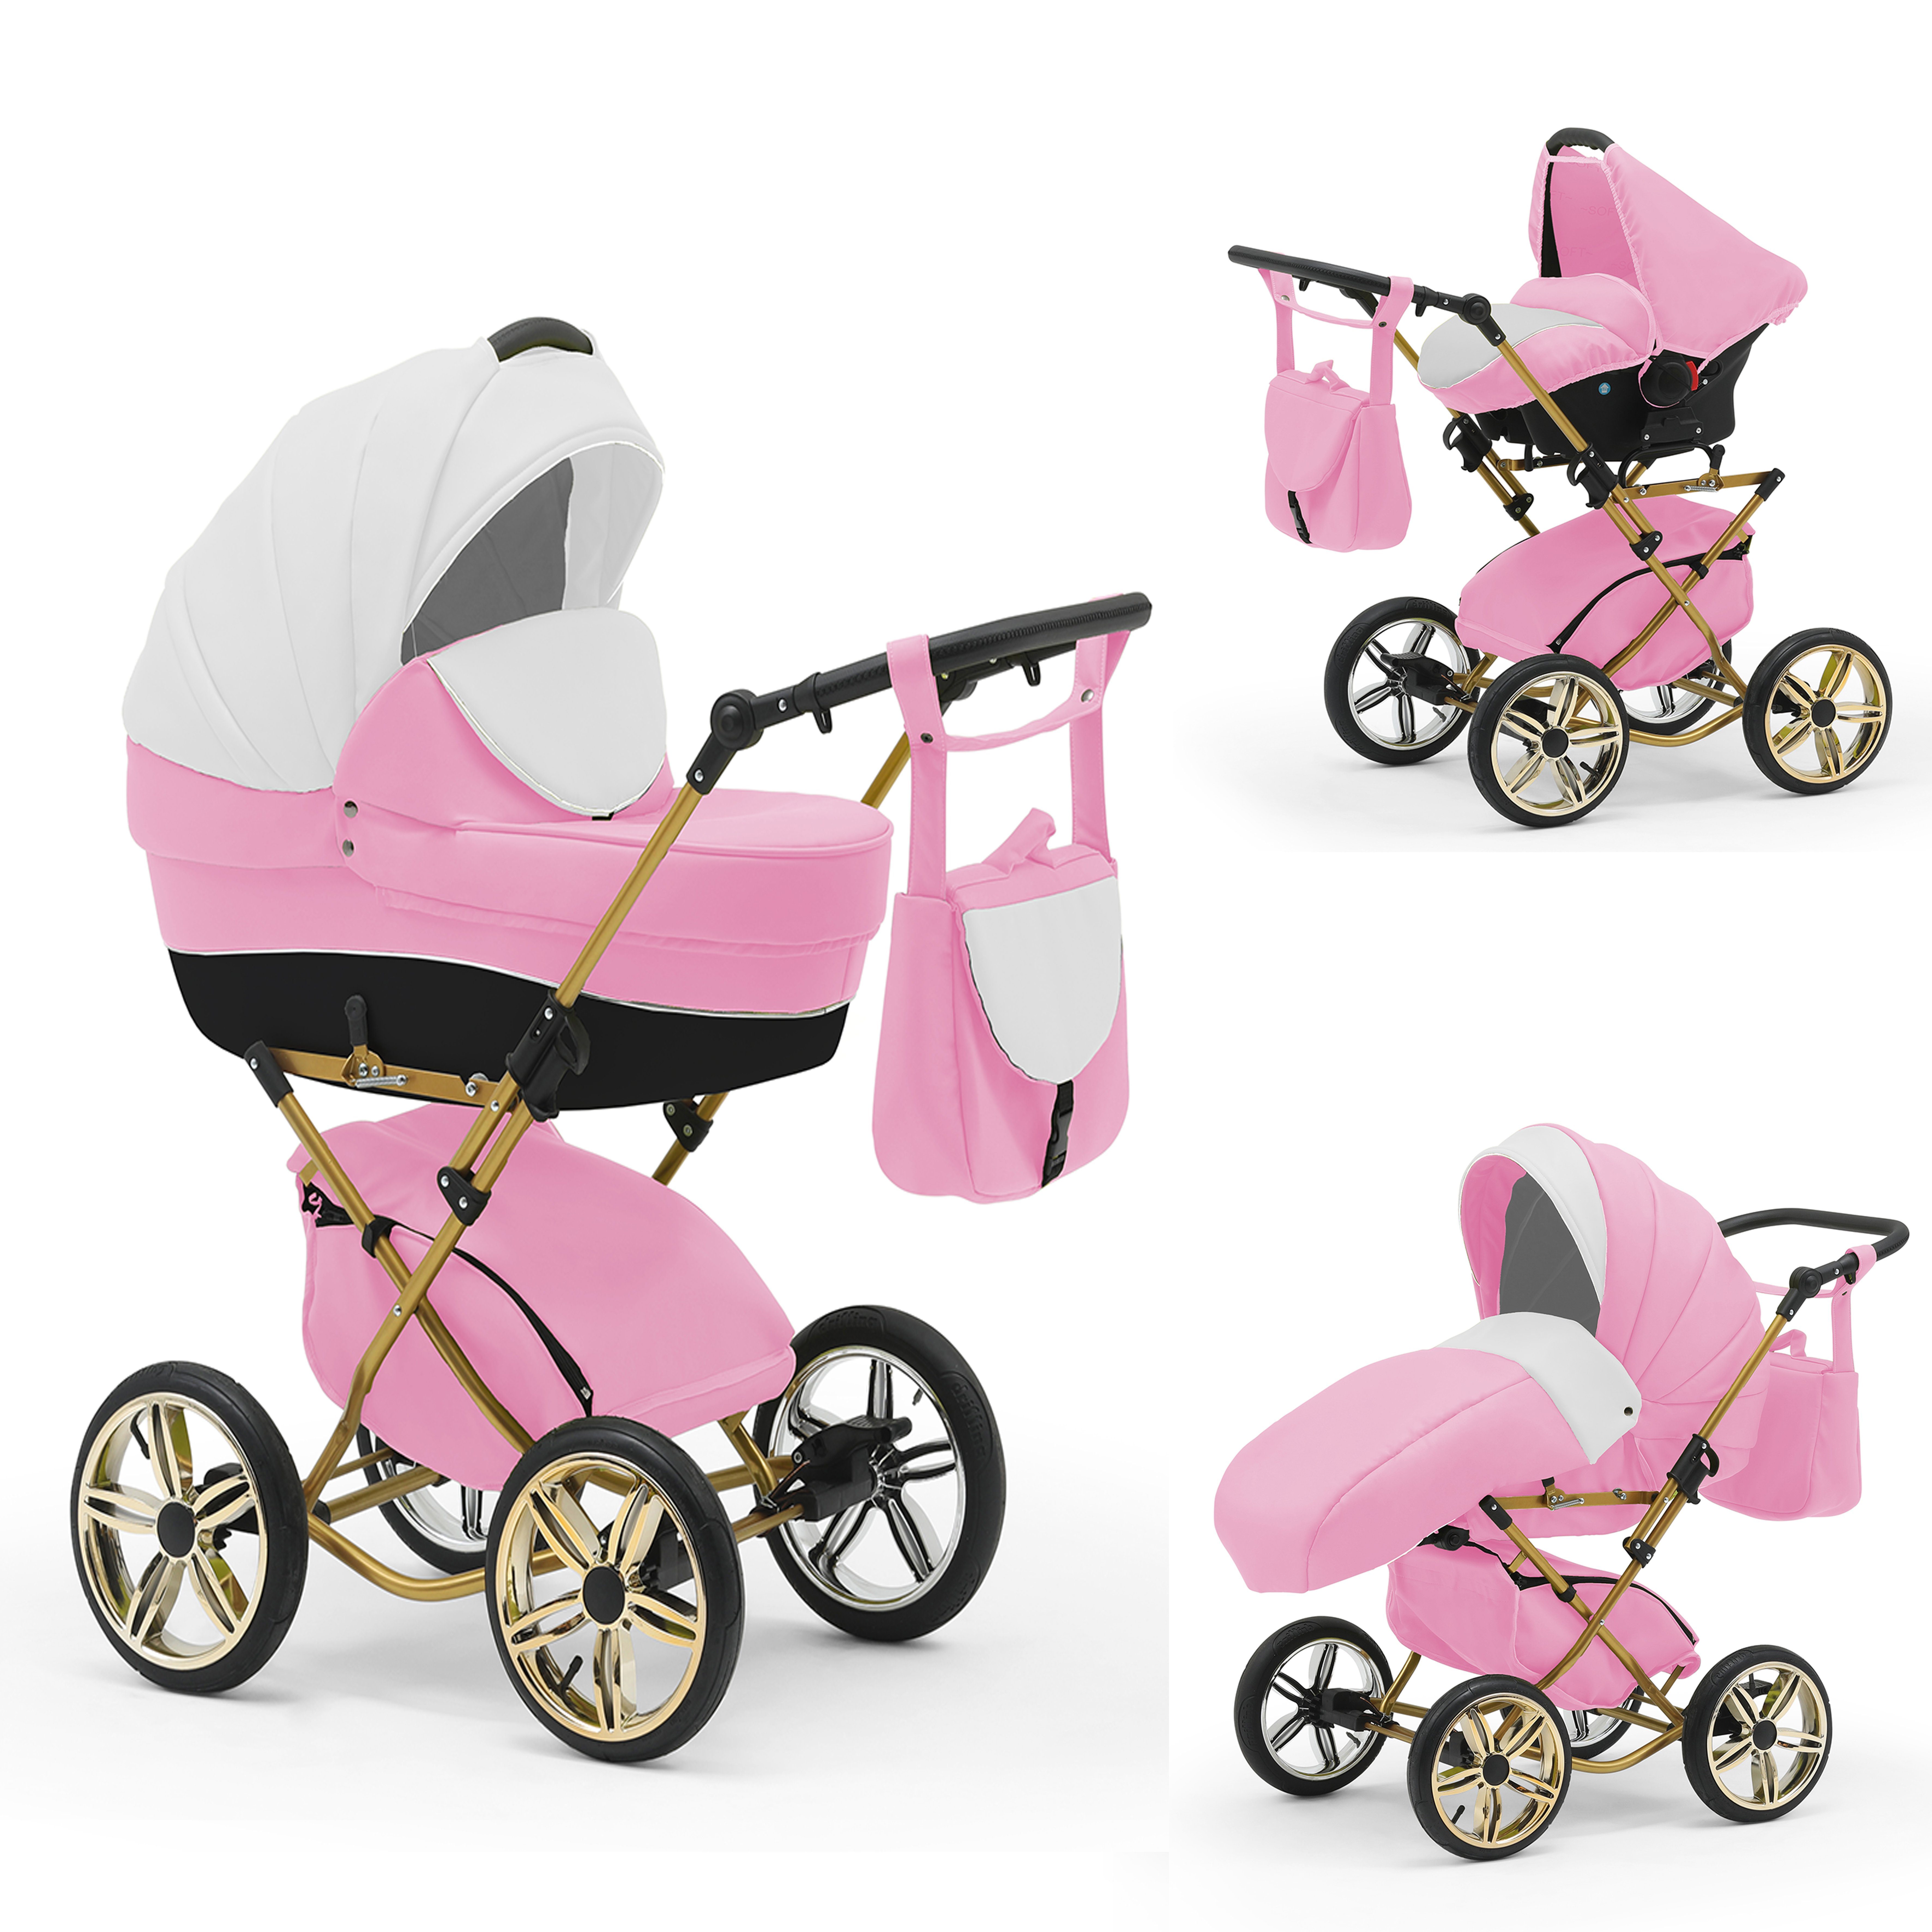 babies-on-wheels Kombi-Kinderwagen Sorento 3 in 1 inkl. Autositz - 13 Teile - in 10 Designs Rosa-Weiß